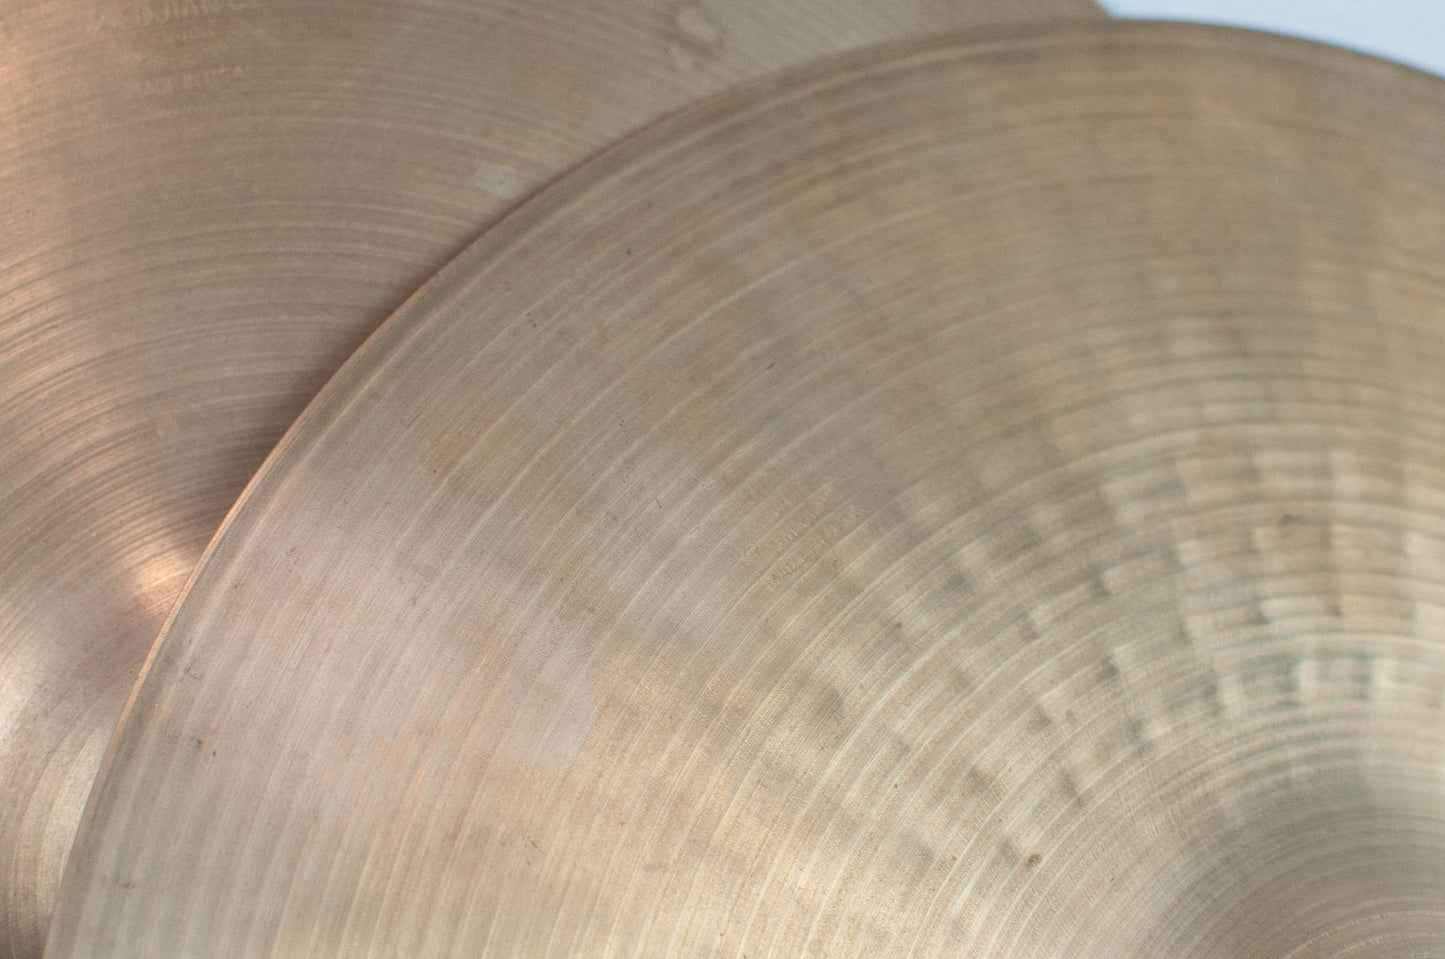 1970s Zildjian A 14” Hi Hat Cymbals 759g 1111g